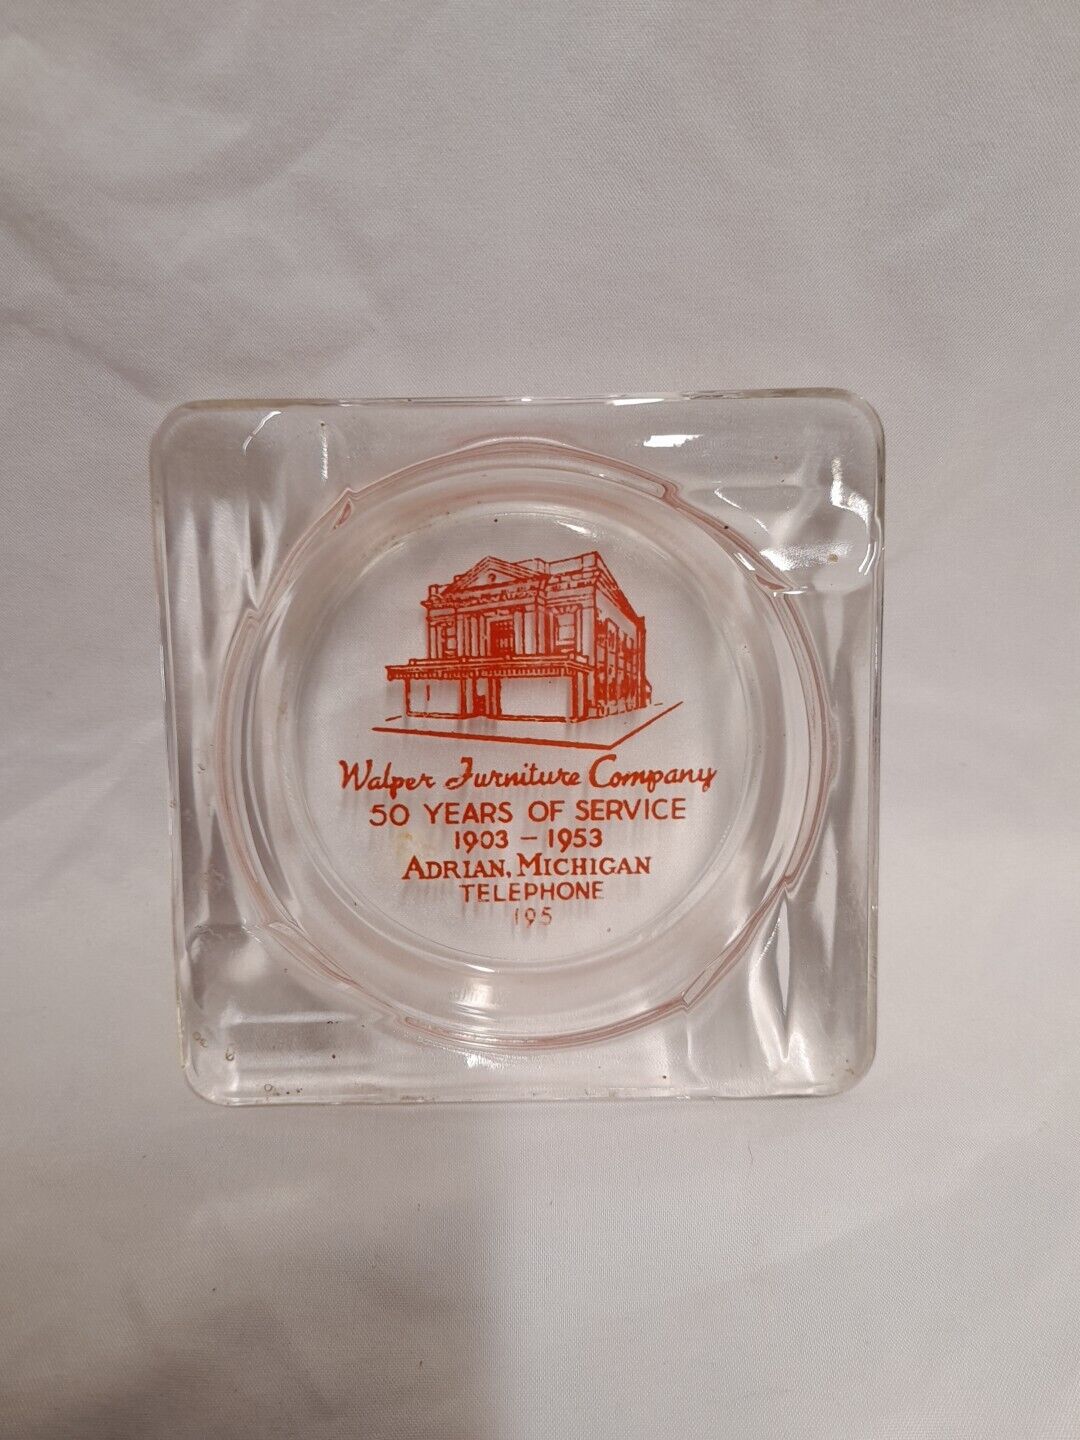  Vintage Glass Ashtray Walper Furniture Company Adrian Michigan 50 Years Of Serv